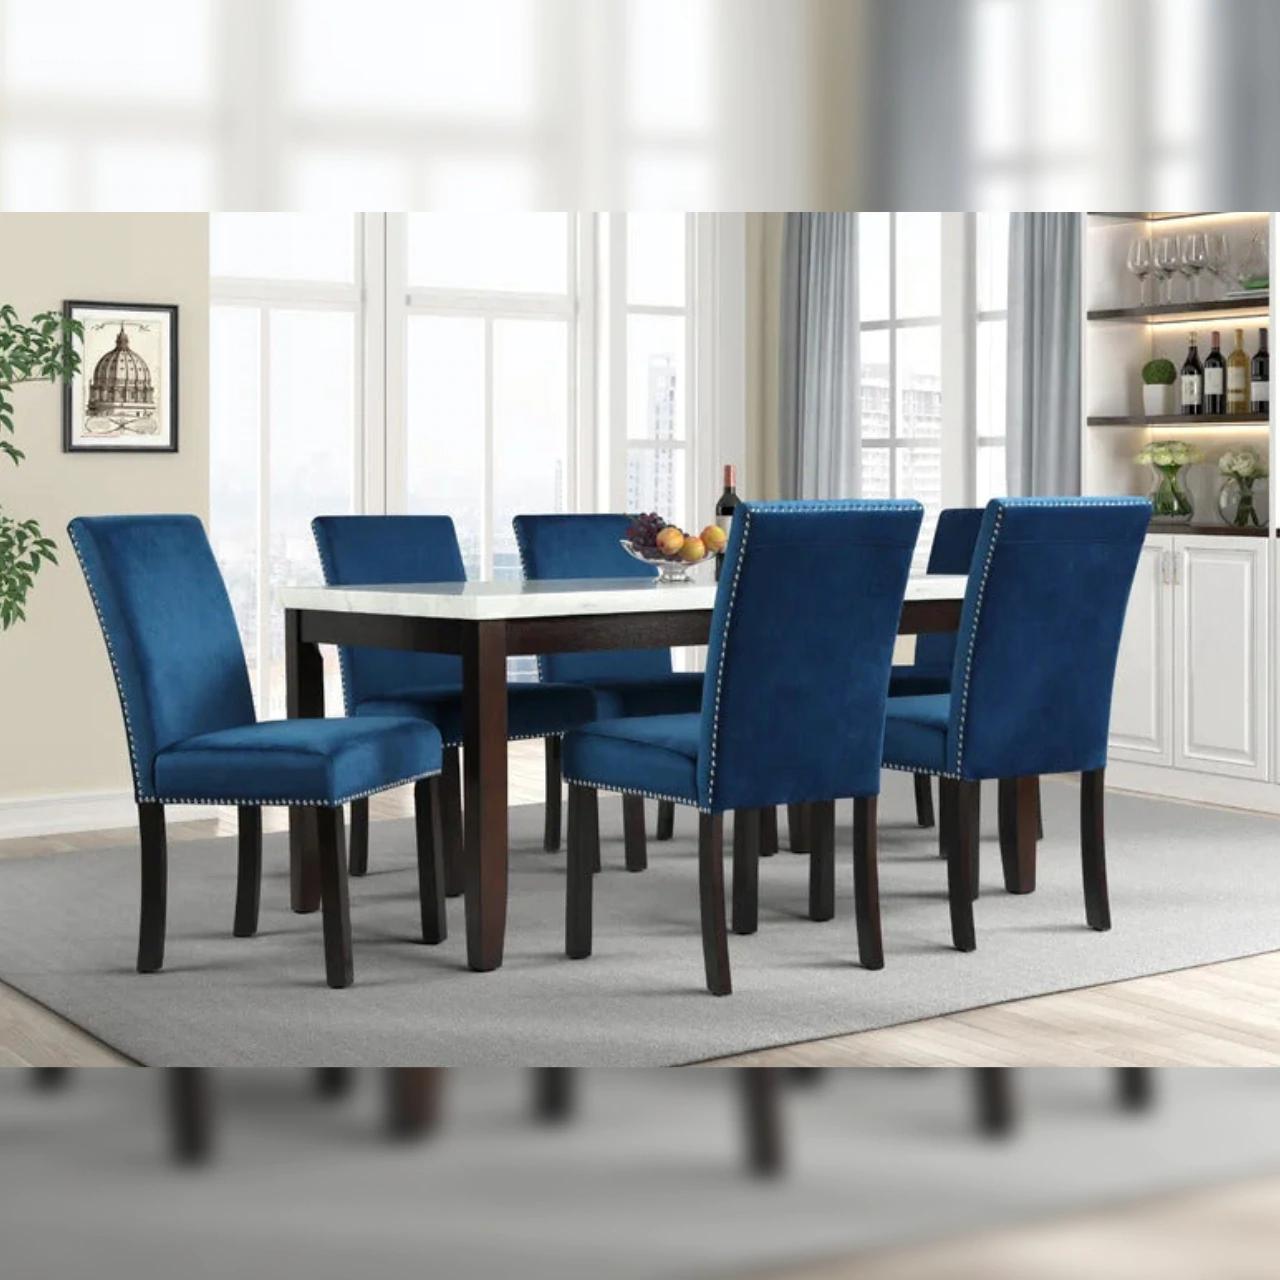 McFerran Furniture D805-T Dining Room Set